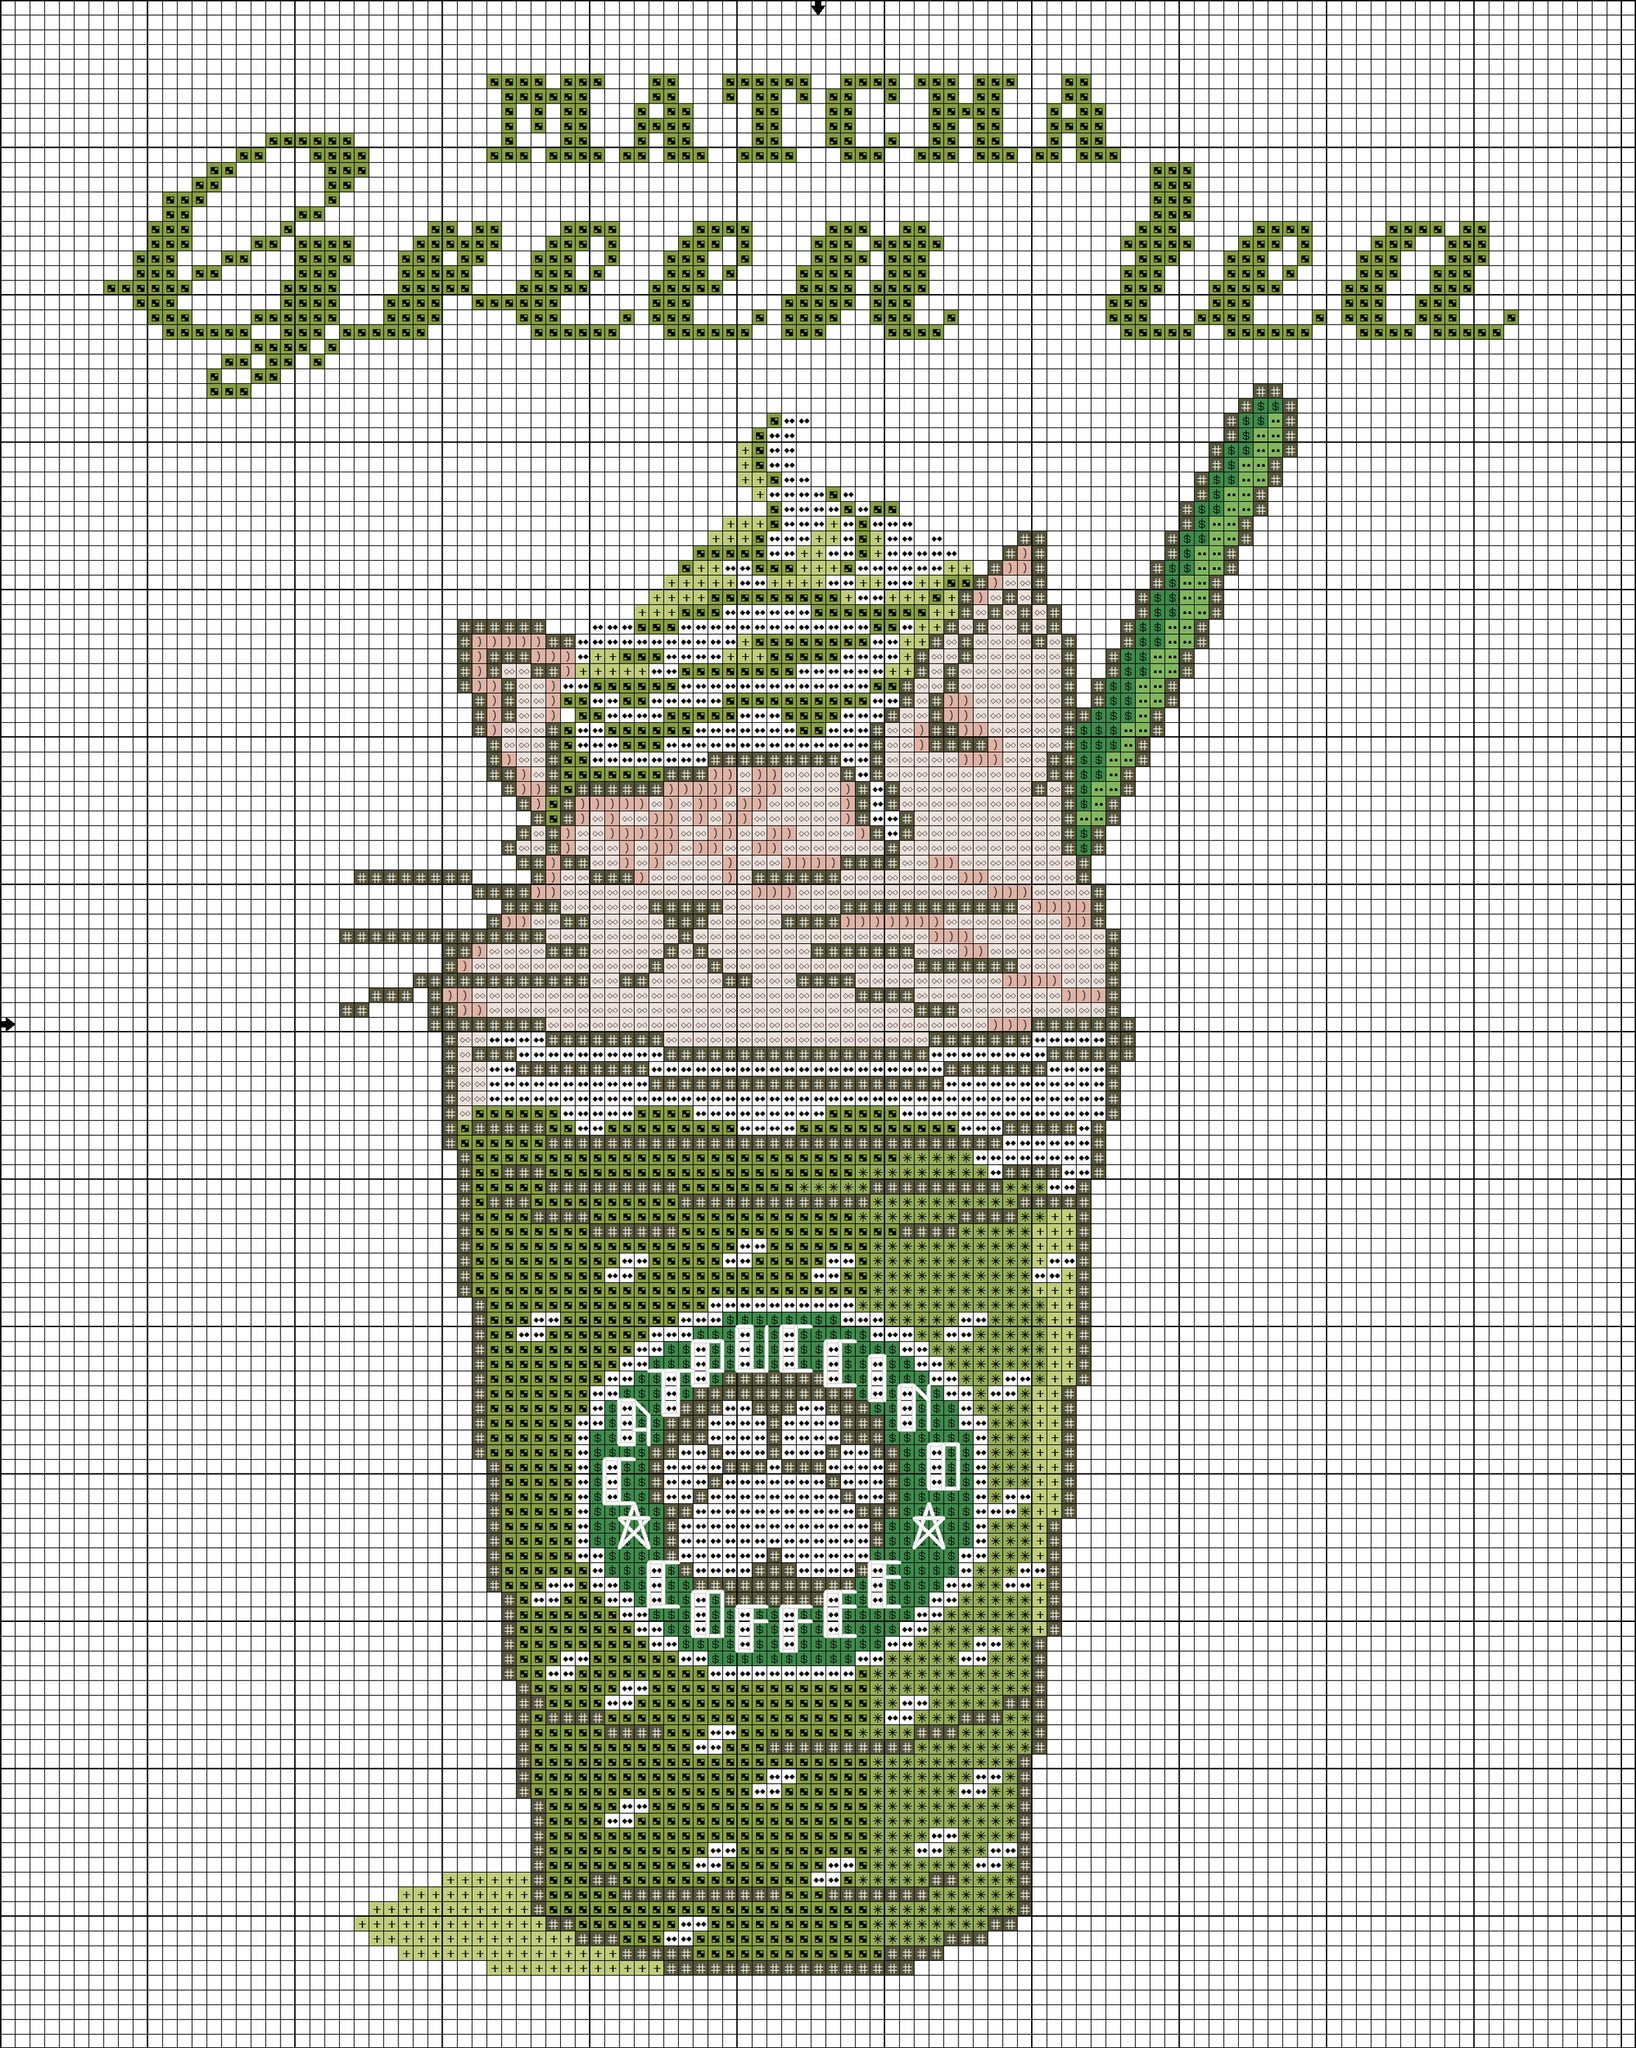 Matcha green tea funny cat free cross stitch pattern